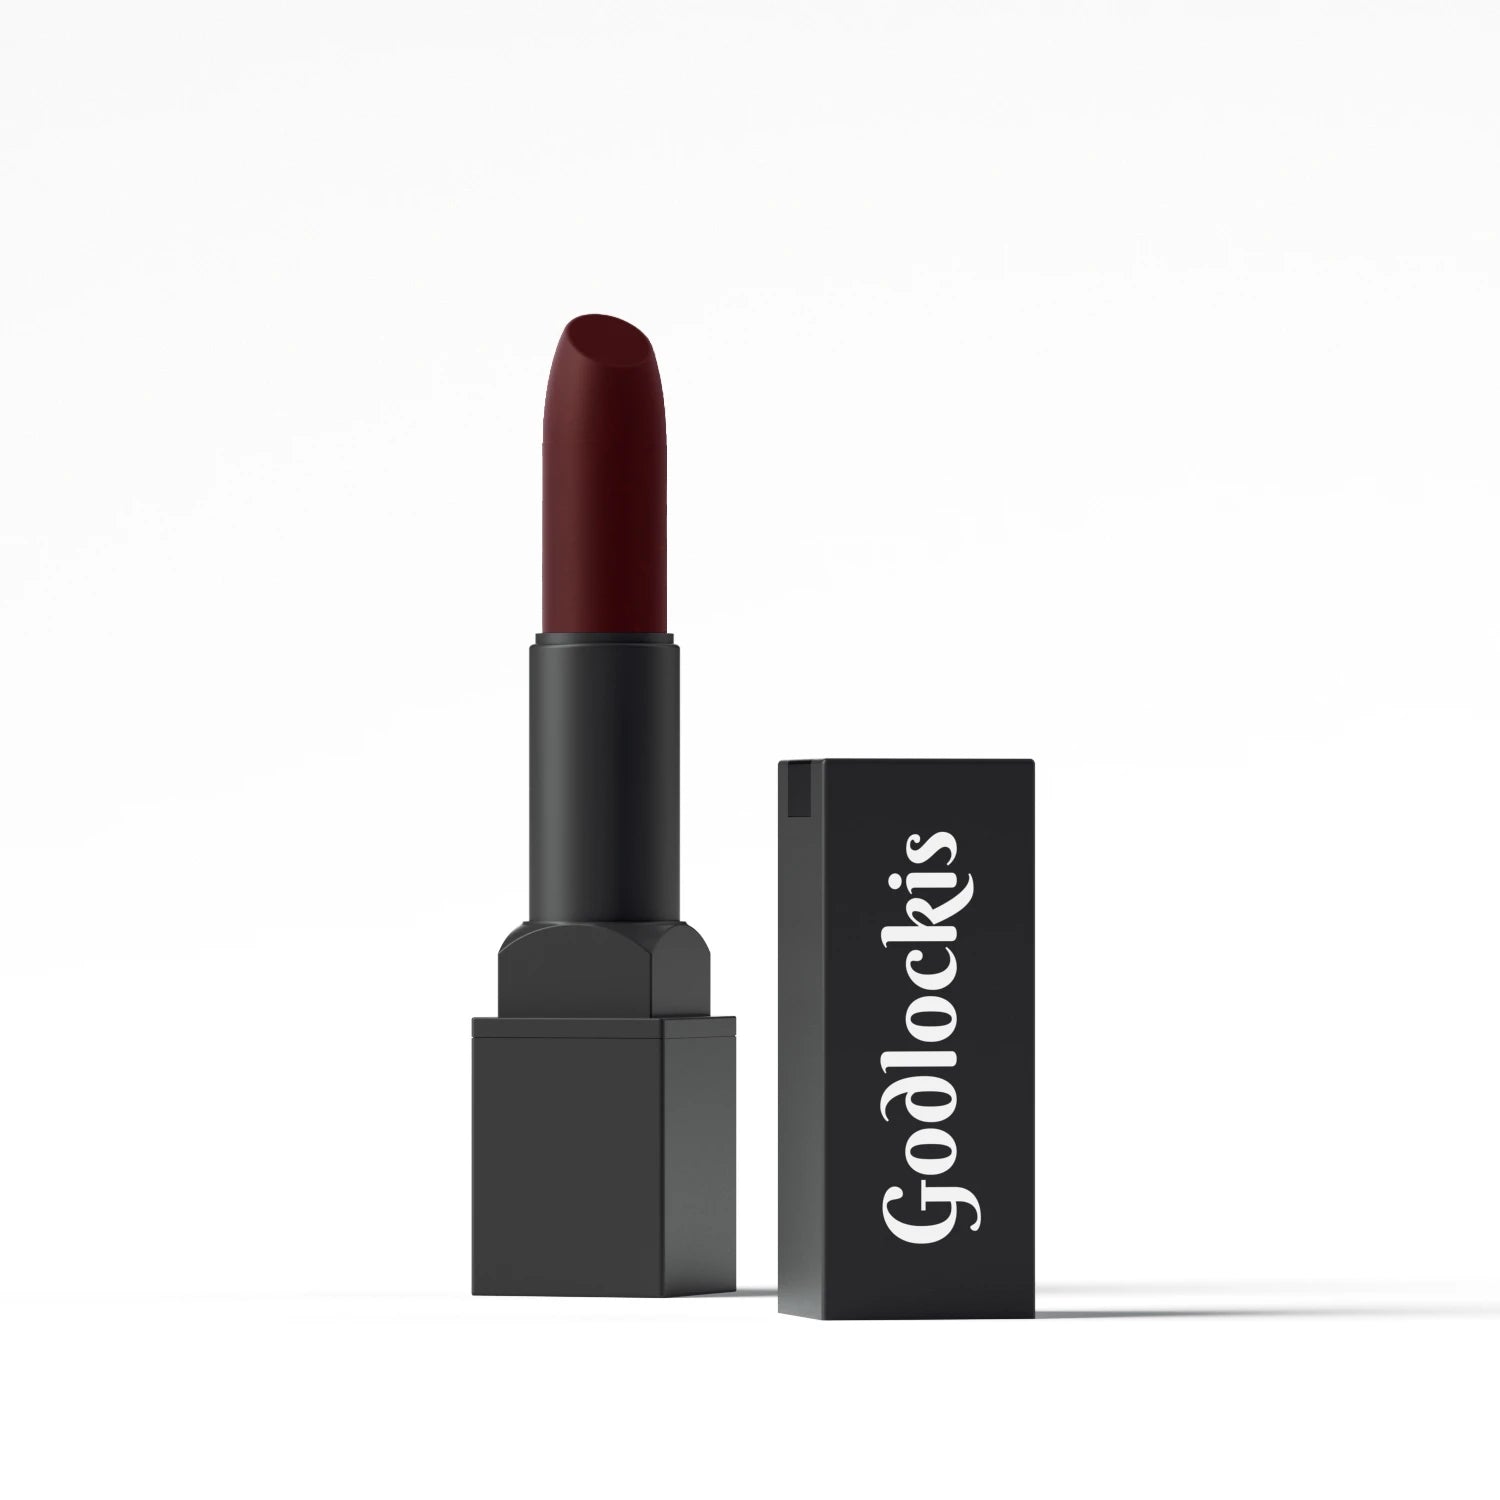 Lipsticks & Cosmetics Collections, Under $20, Staff Pick